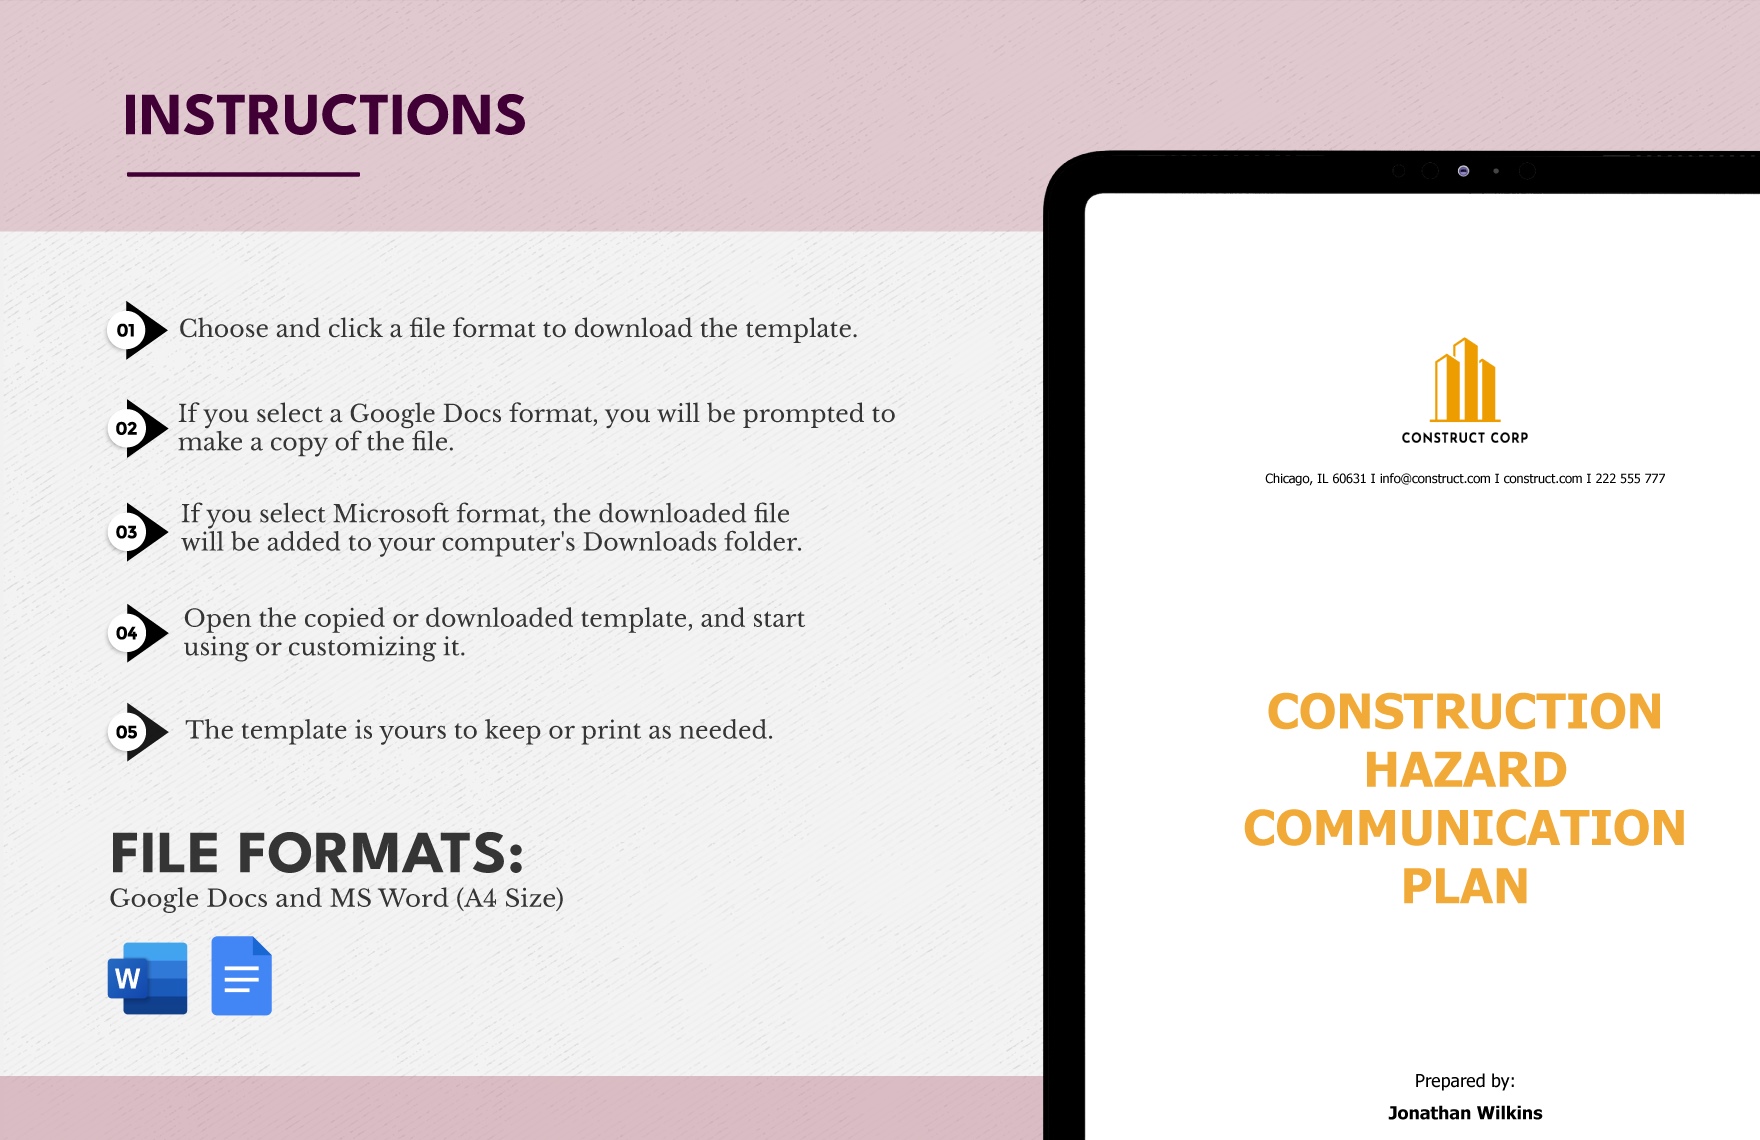 Construction Hazard Communication Plan Template Download in Word